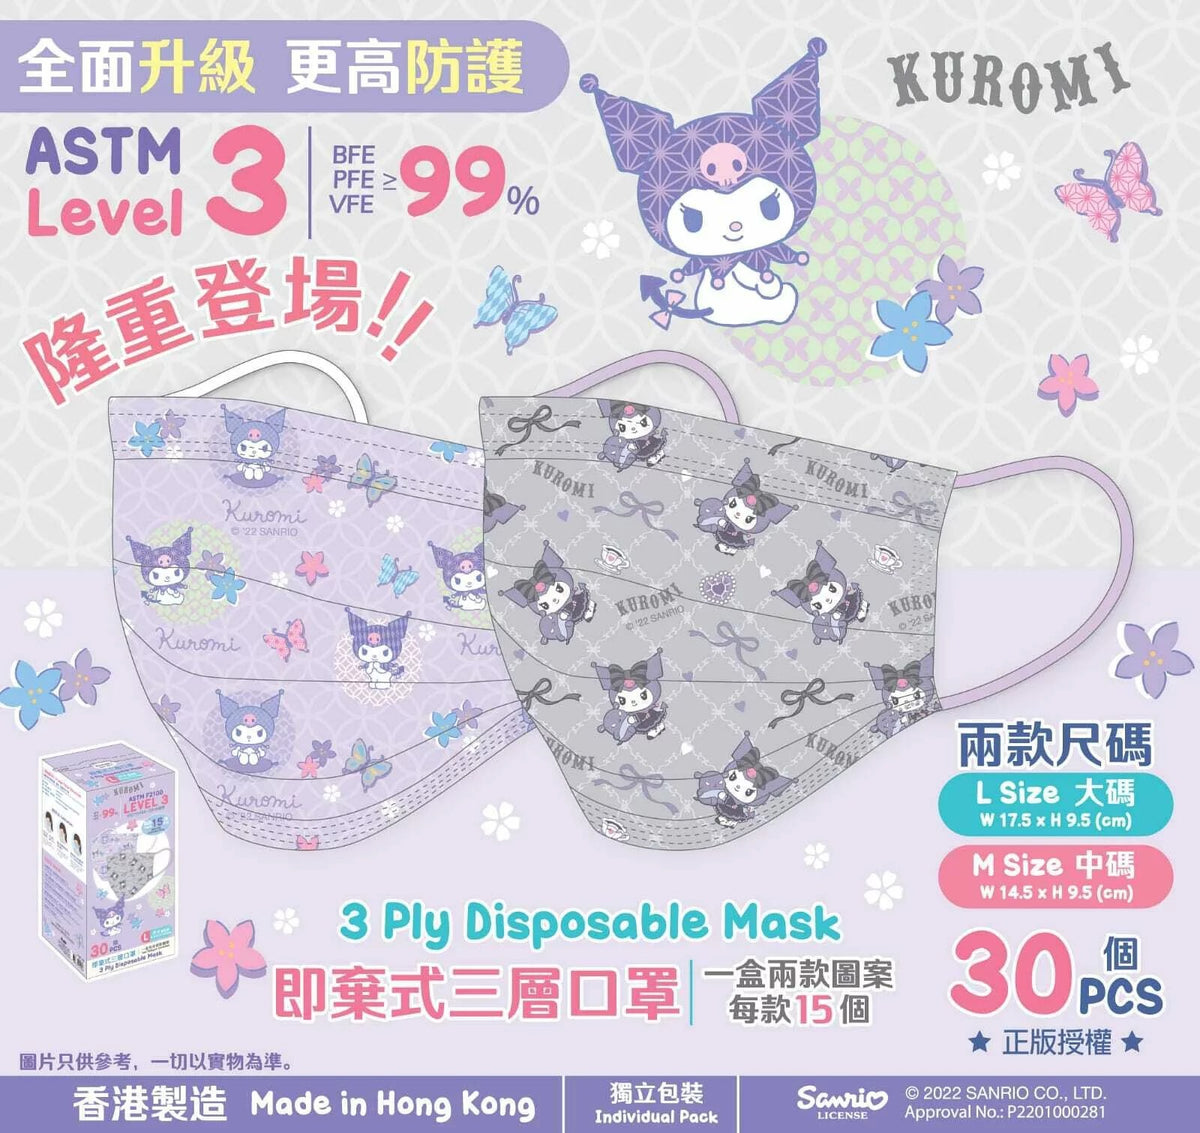 Mask HK 9.0 Kuromi (15pcs) x2 Level 3 Adult